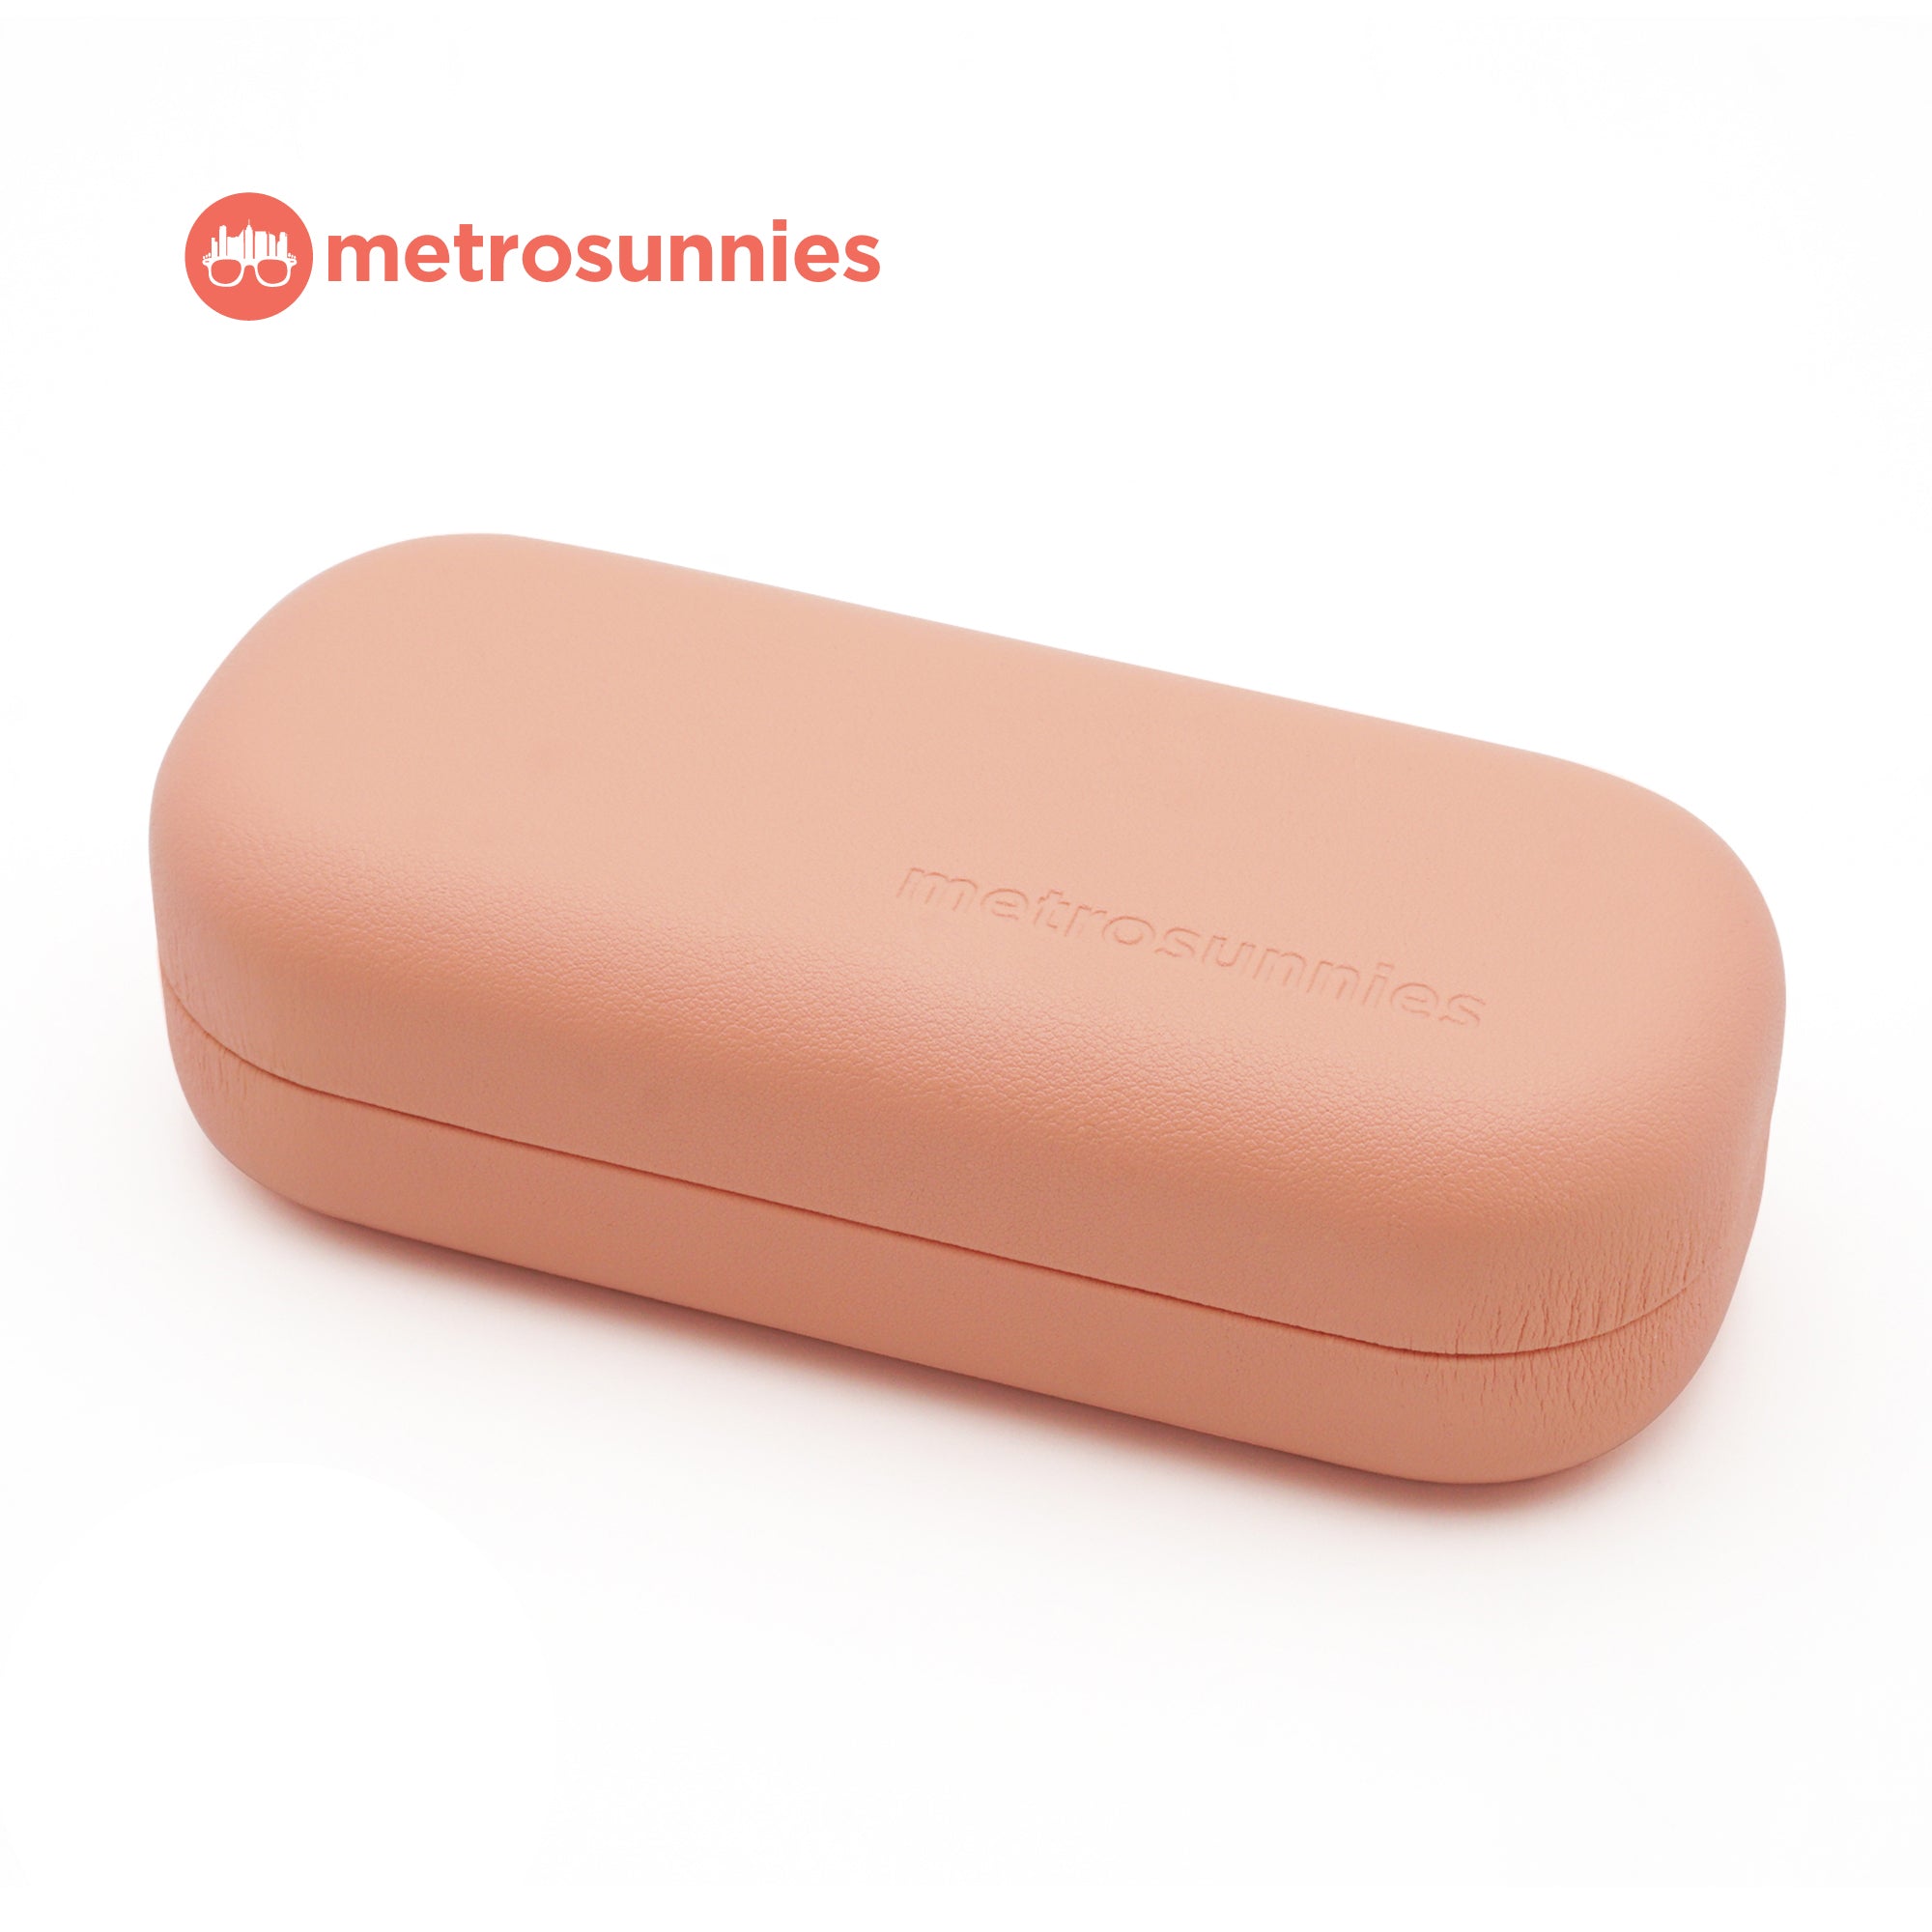 MetroSunnies Charm Hard Case Holder (Blush) / Eyewear Case Holder for Sunnies and Specs